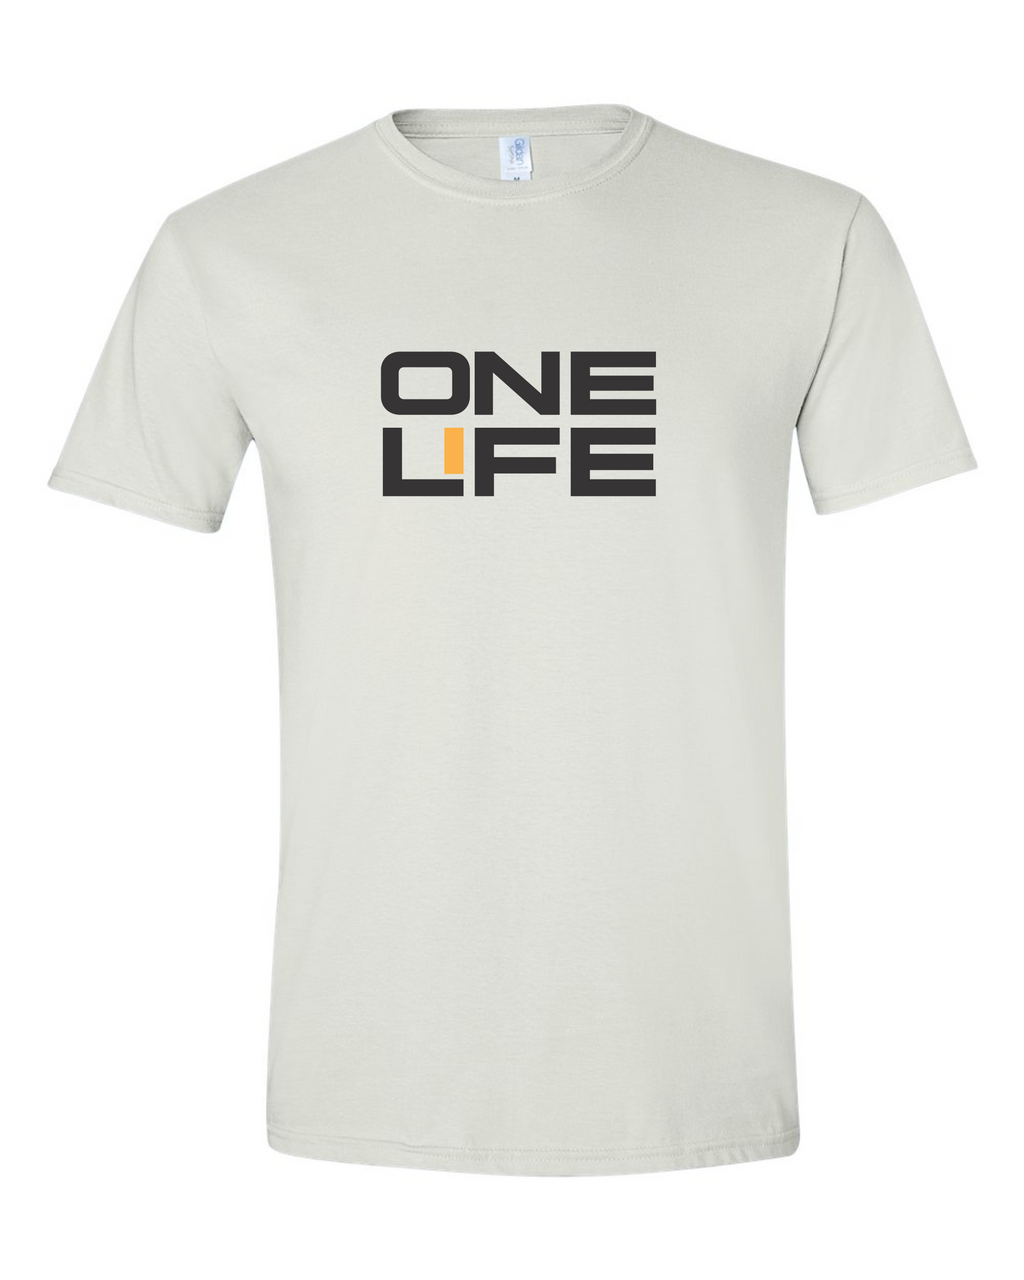 VITA - Unisex Softstyle Cotton T-Shirt - One Life